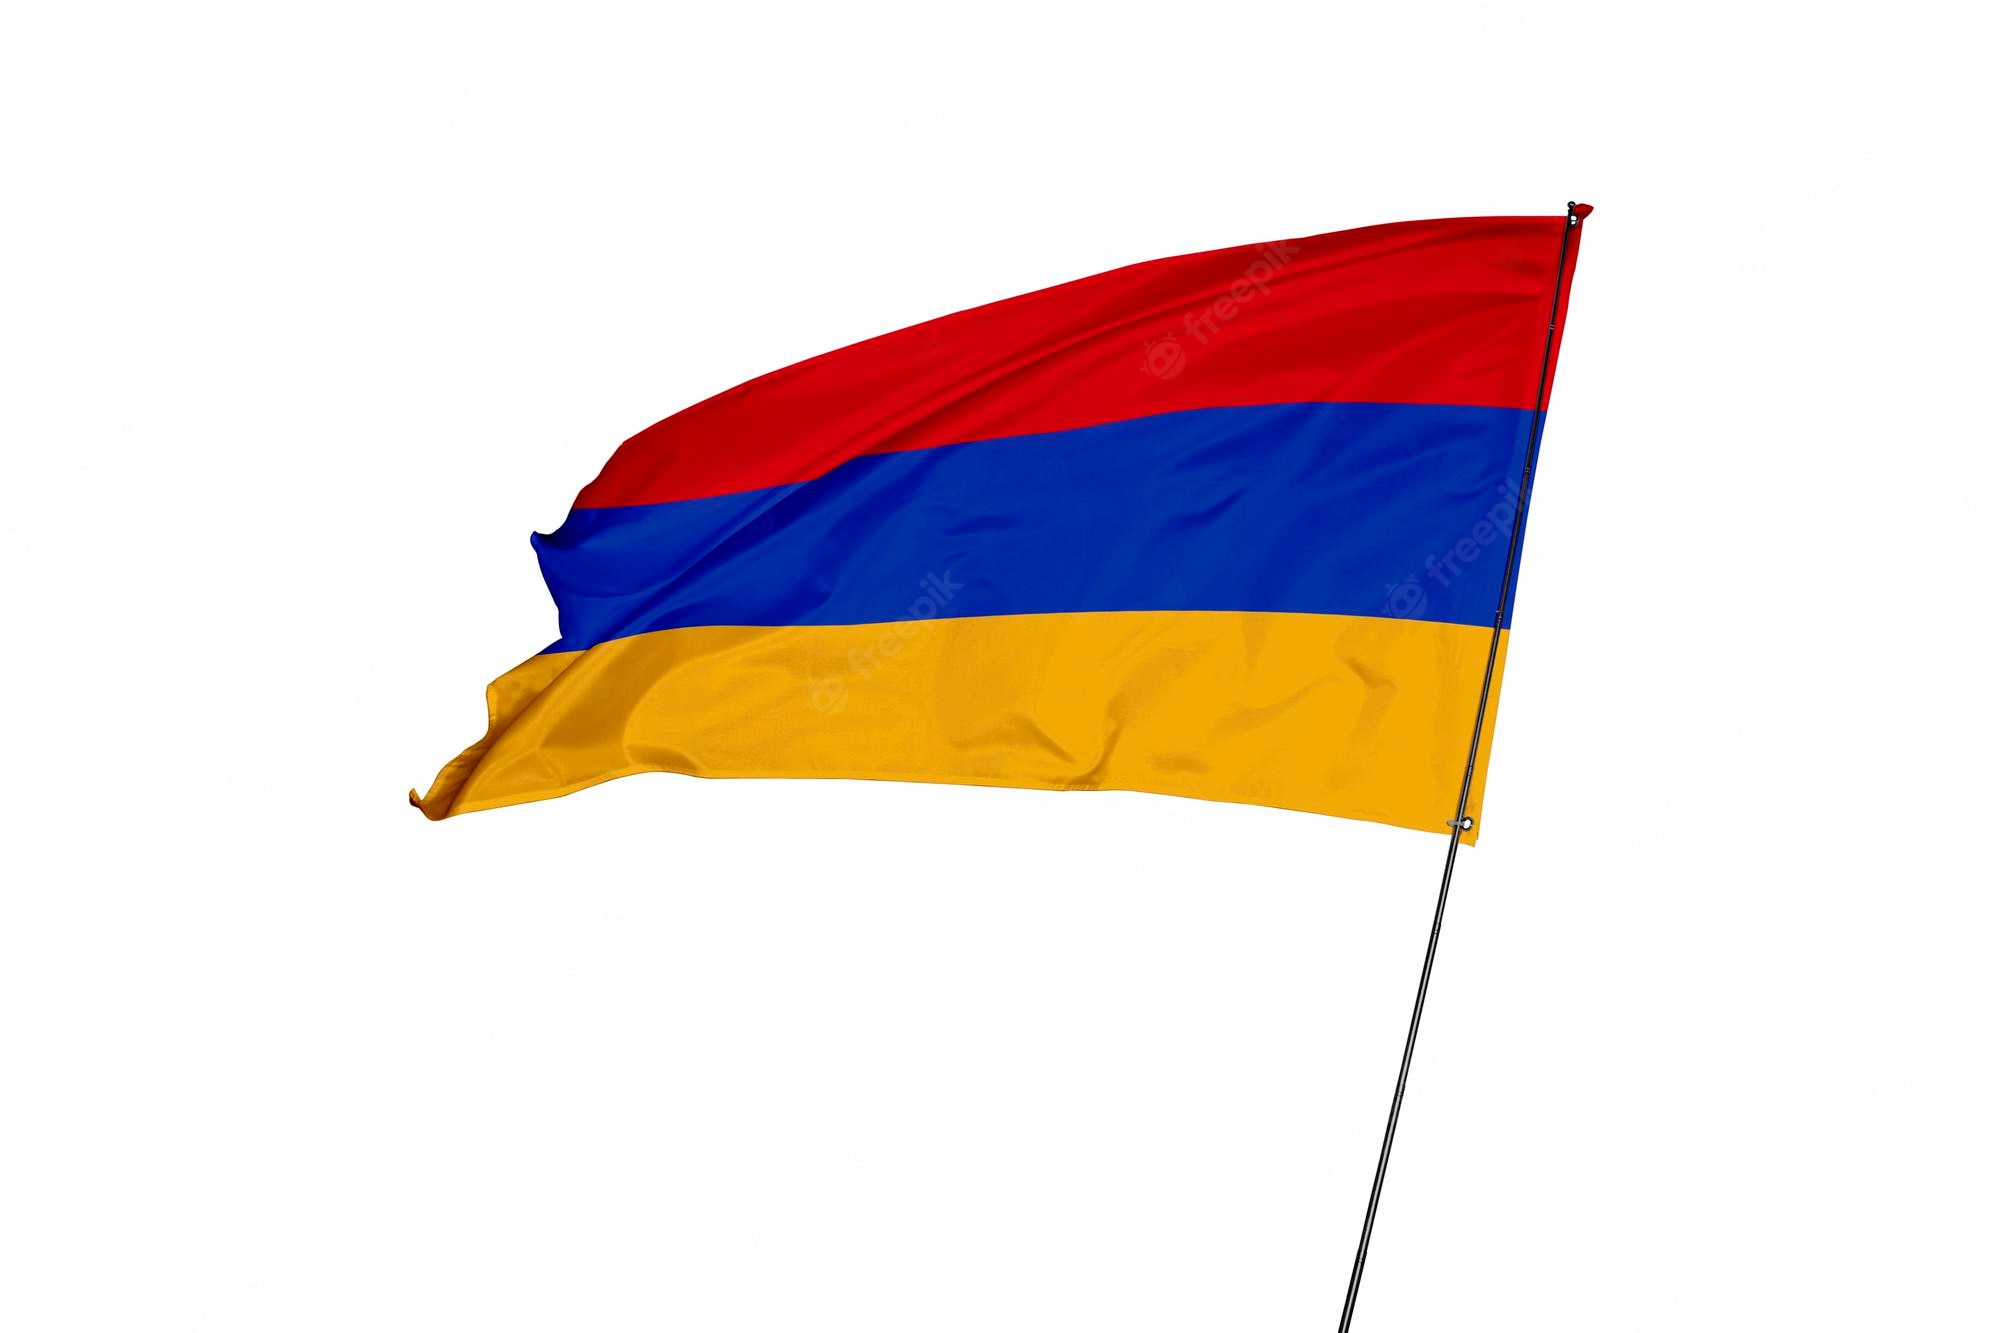 Armenian flag Image. Free Vectors, & PSD